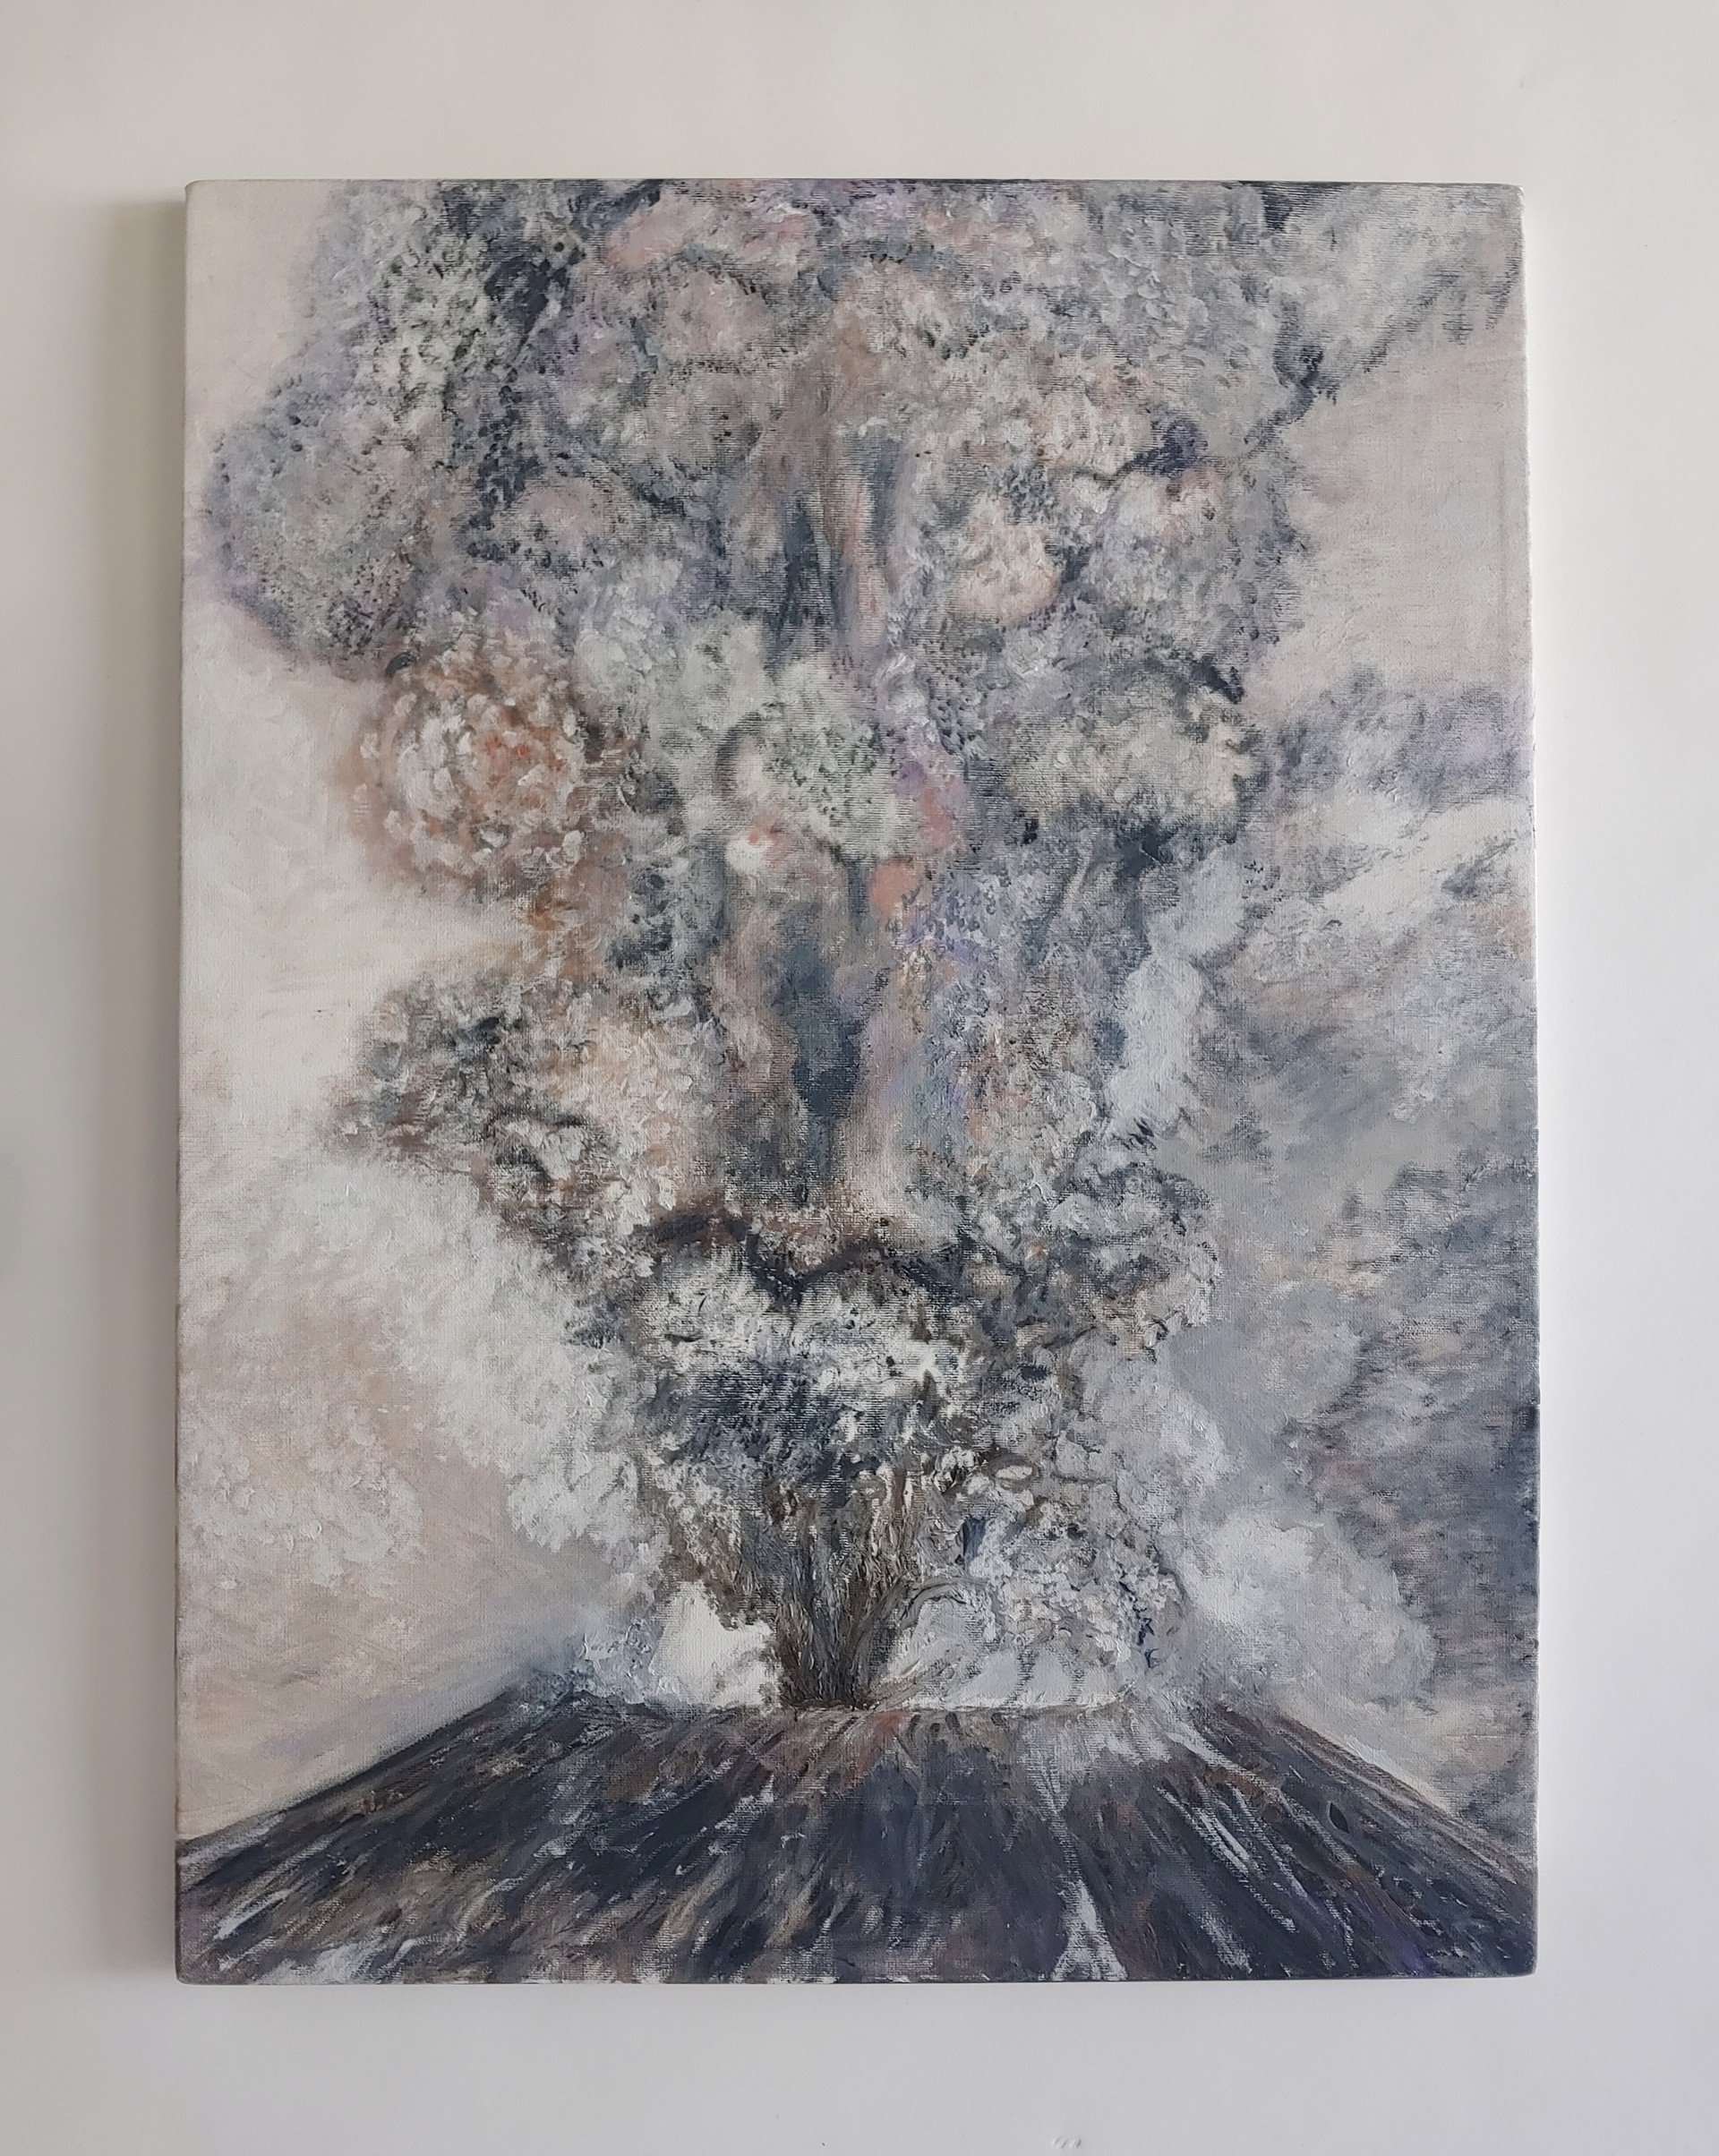 Volcano - Painting by David Amdur